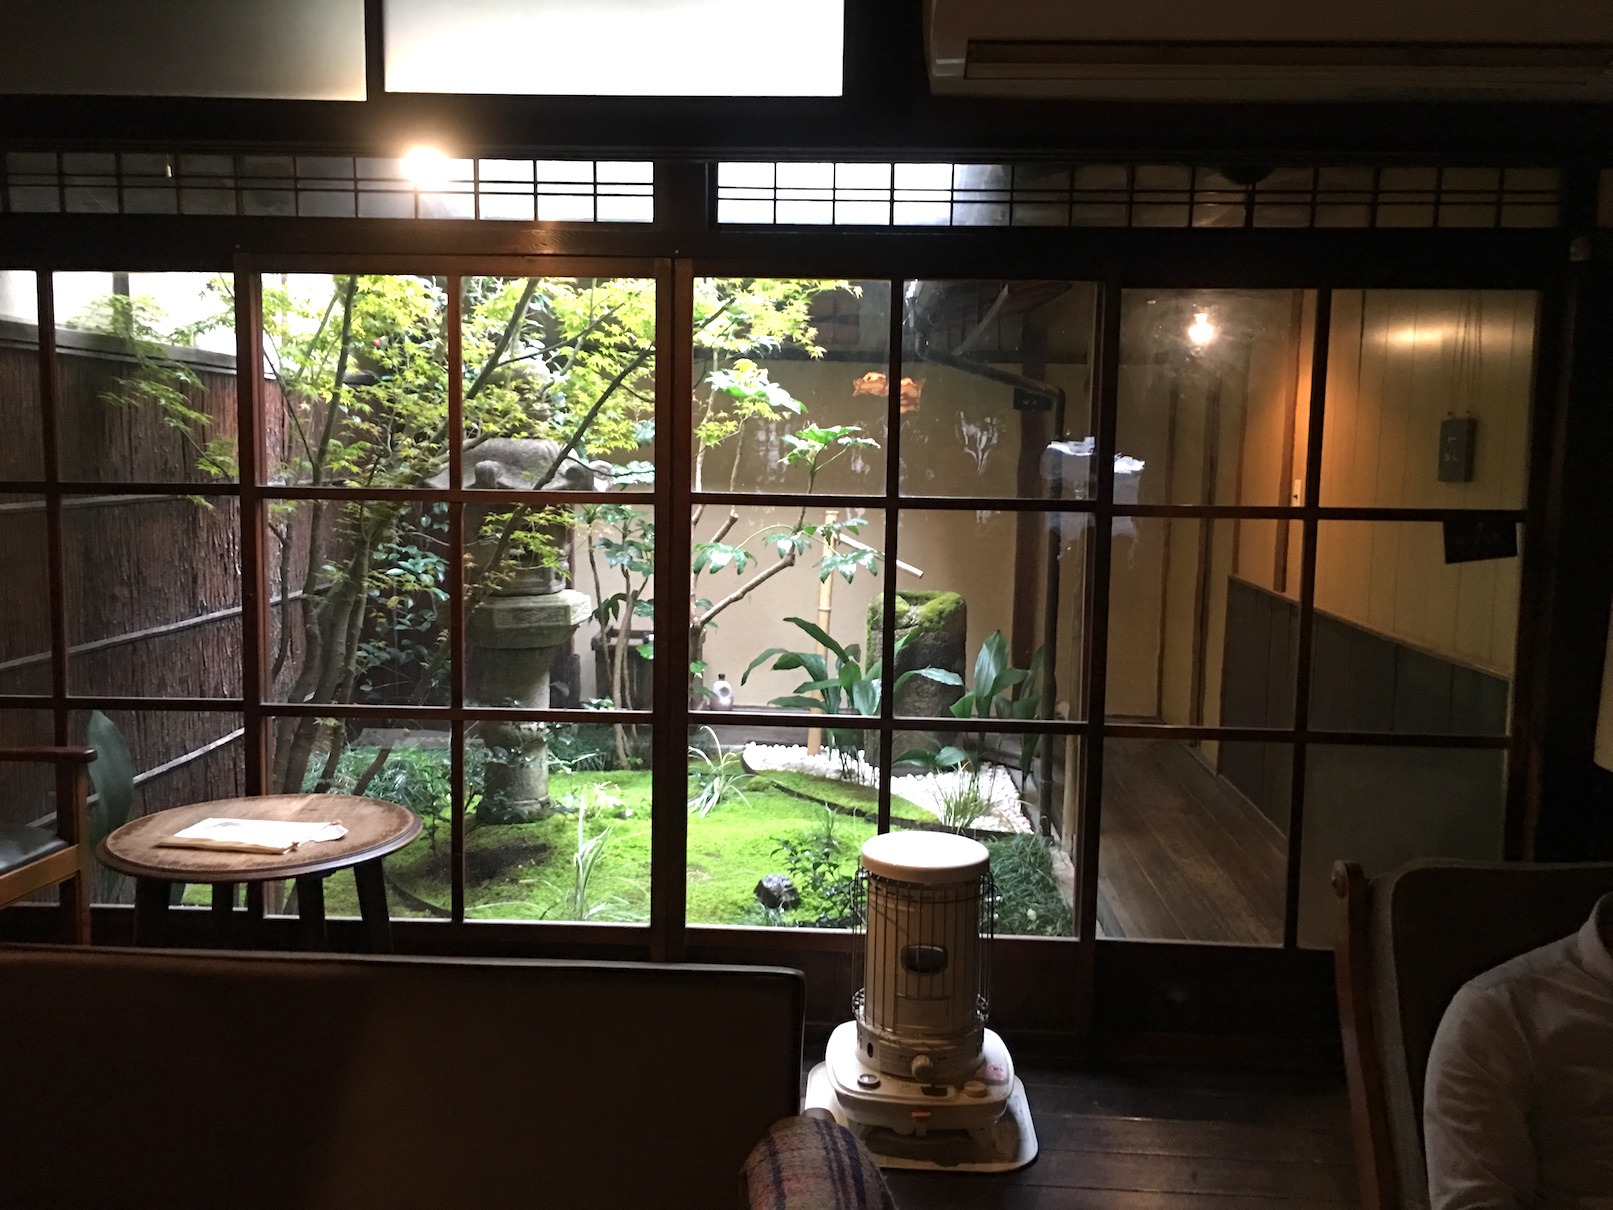 Kyoto Cafe inner garden view